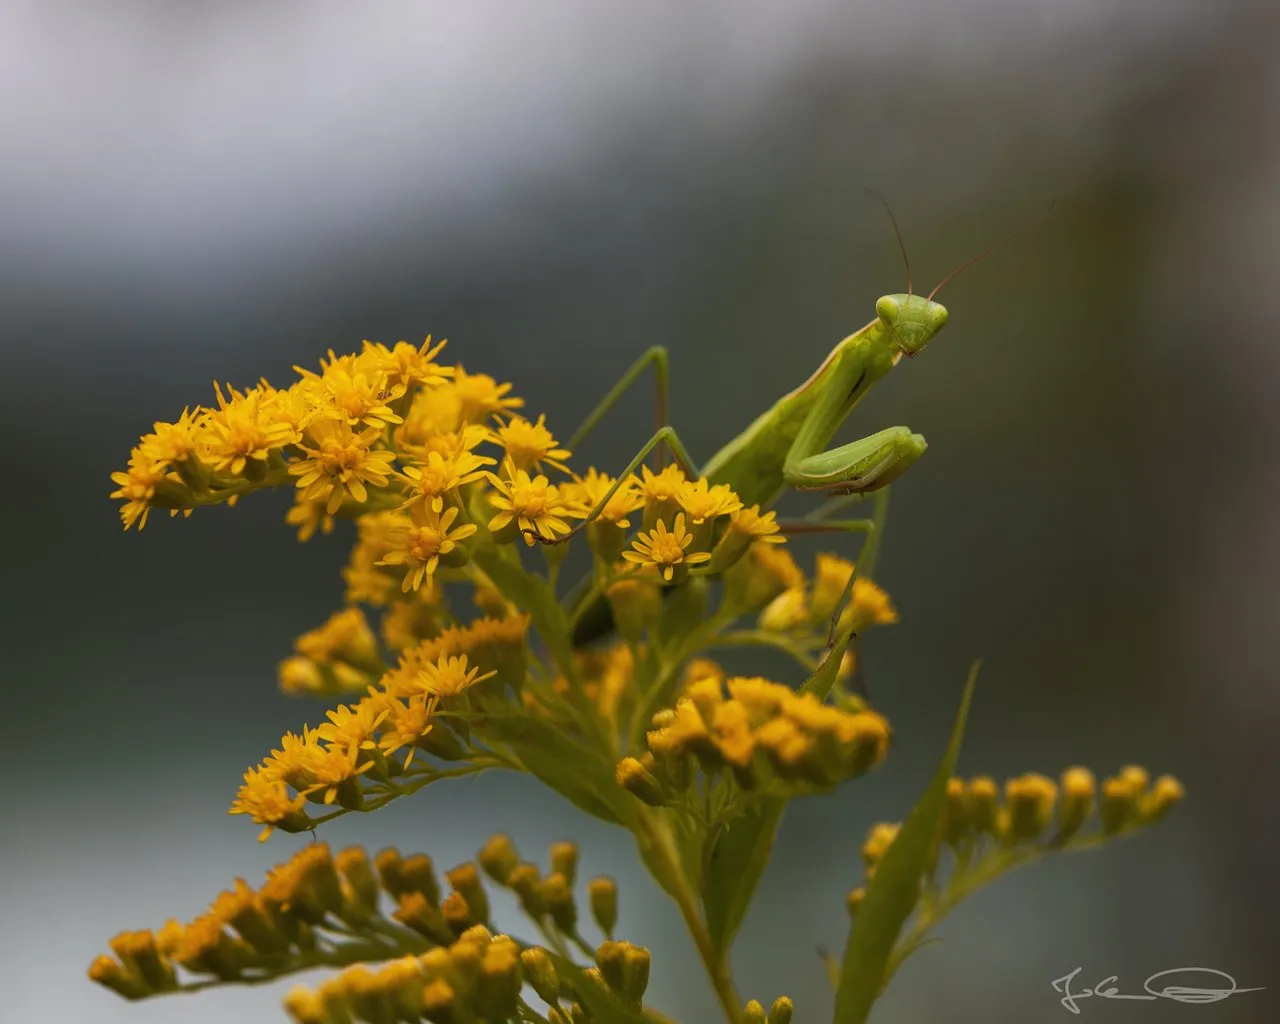 Green Mantis